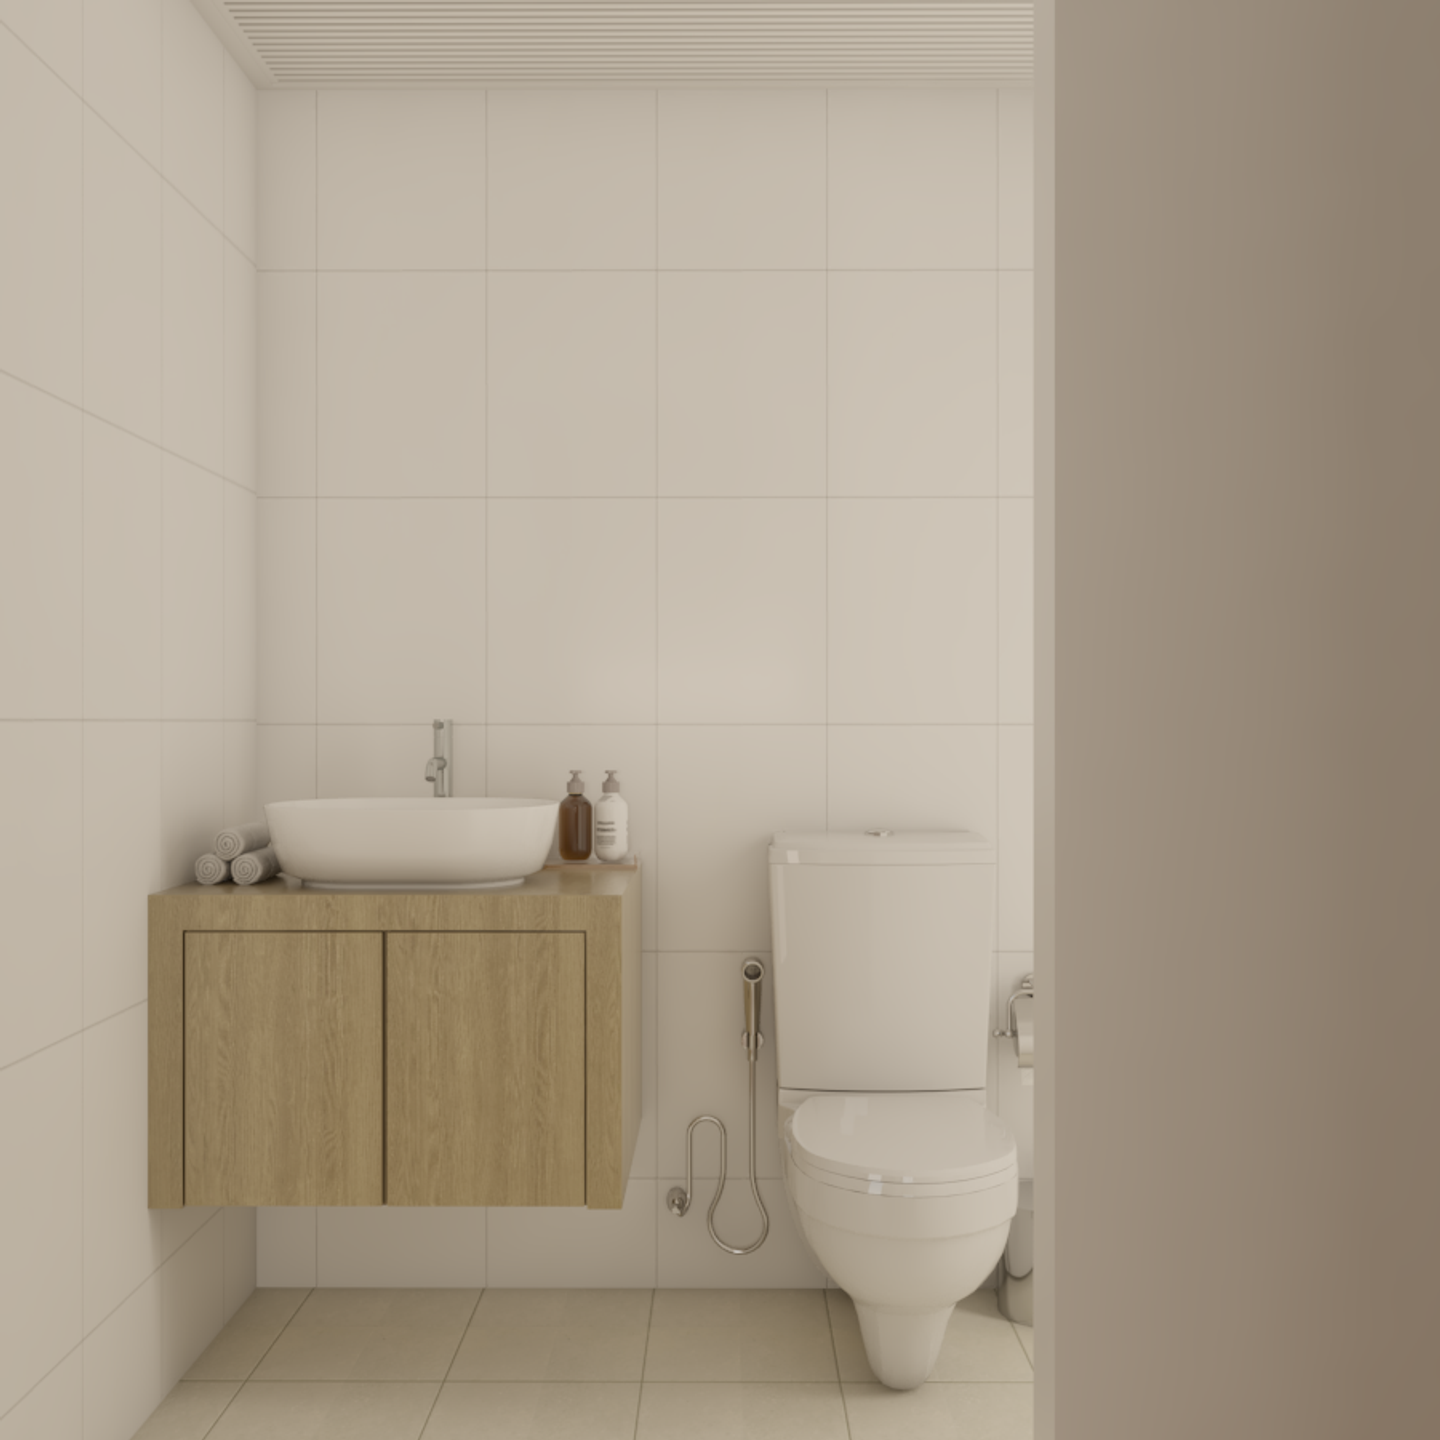 White Tiled Walls Hanging Vanity Minimal Compact Bathroom Design - Livspace